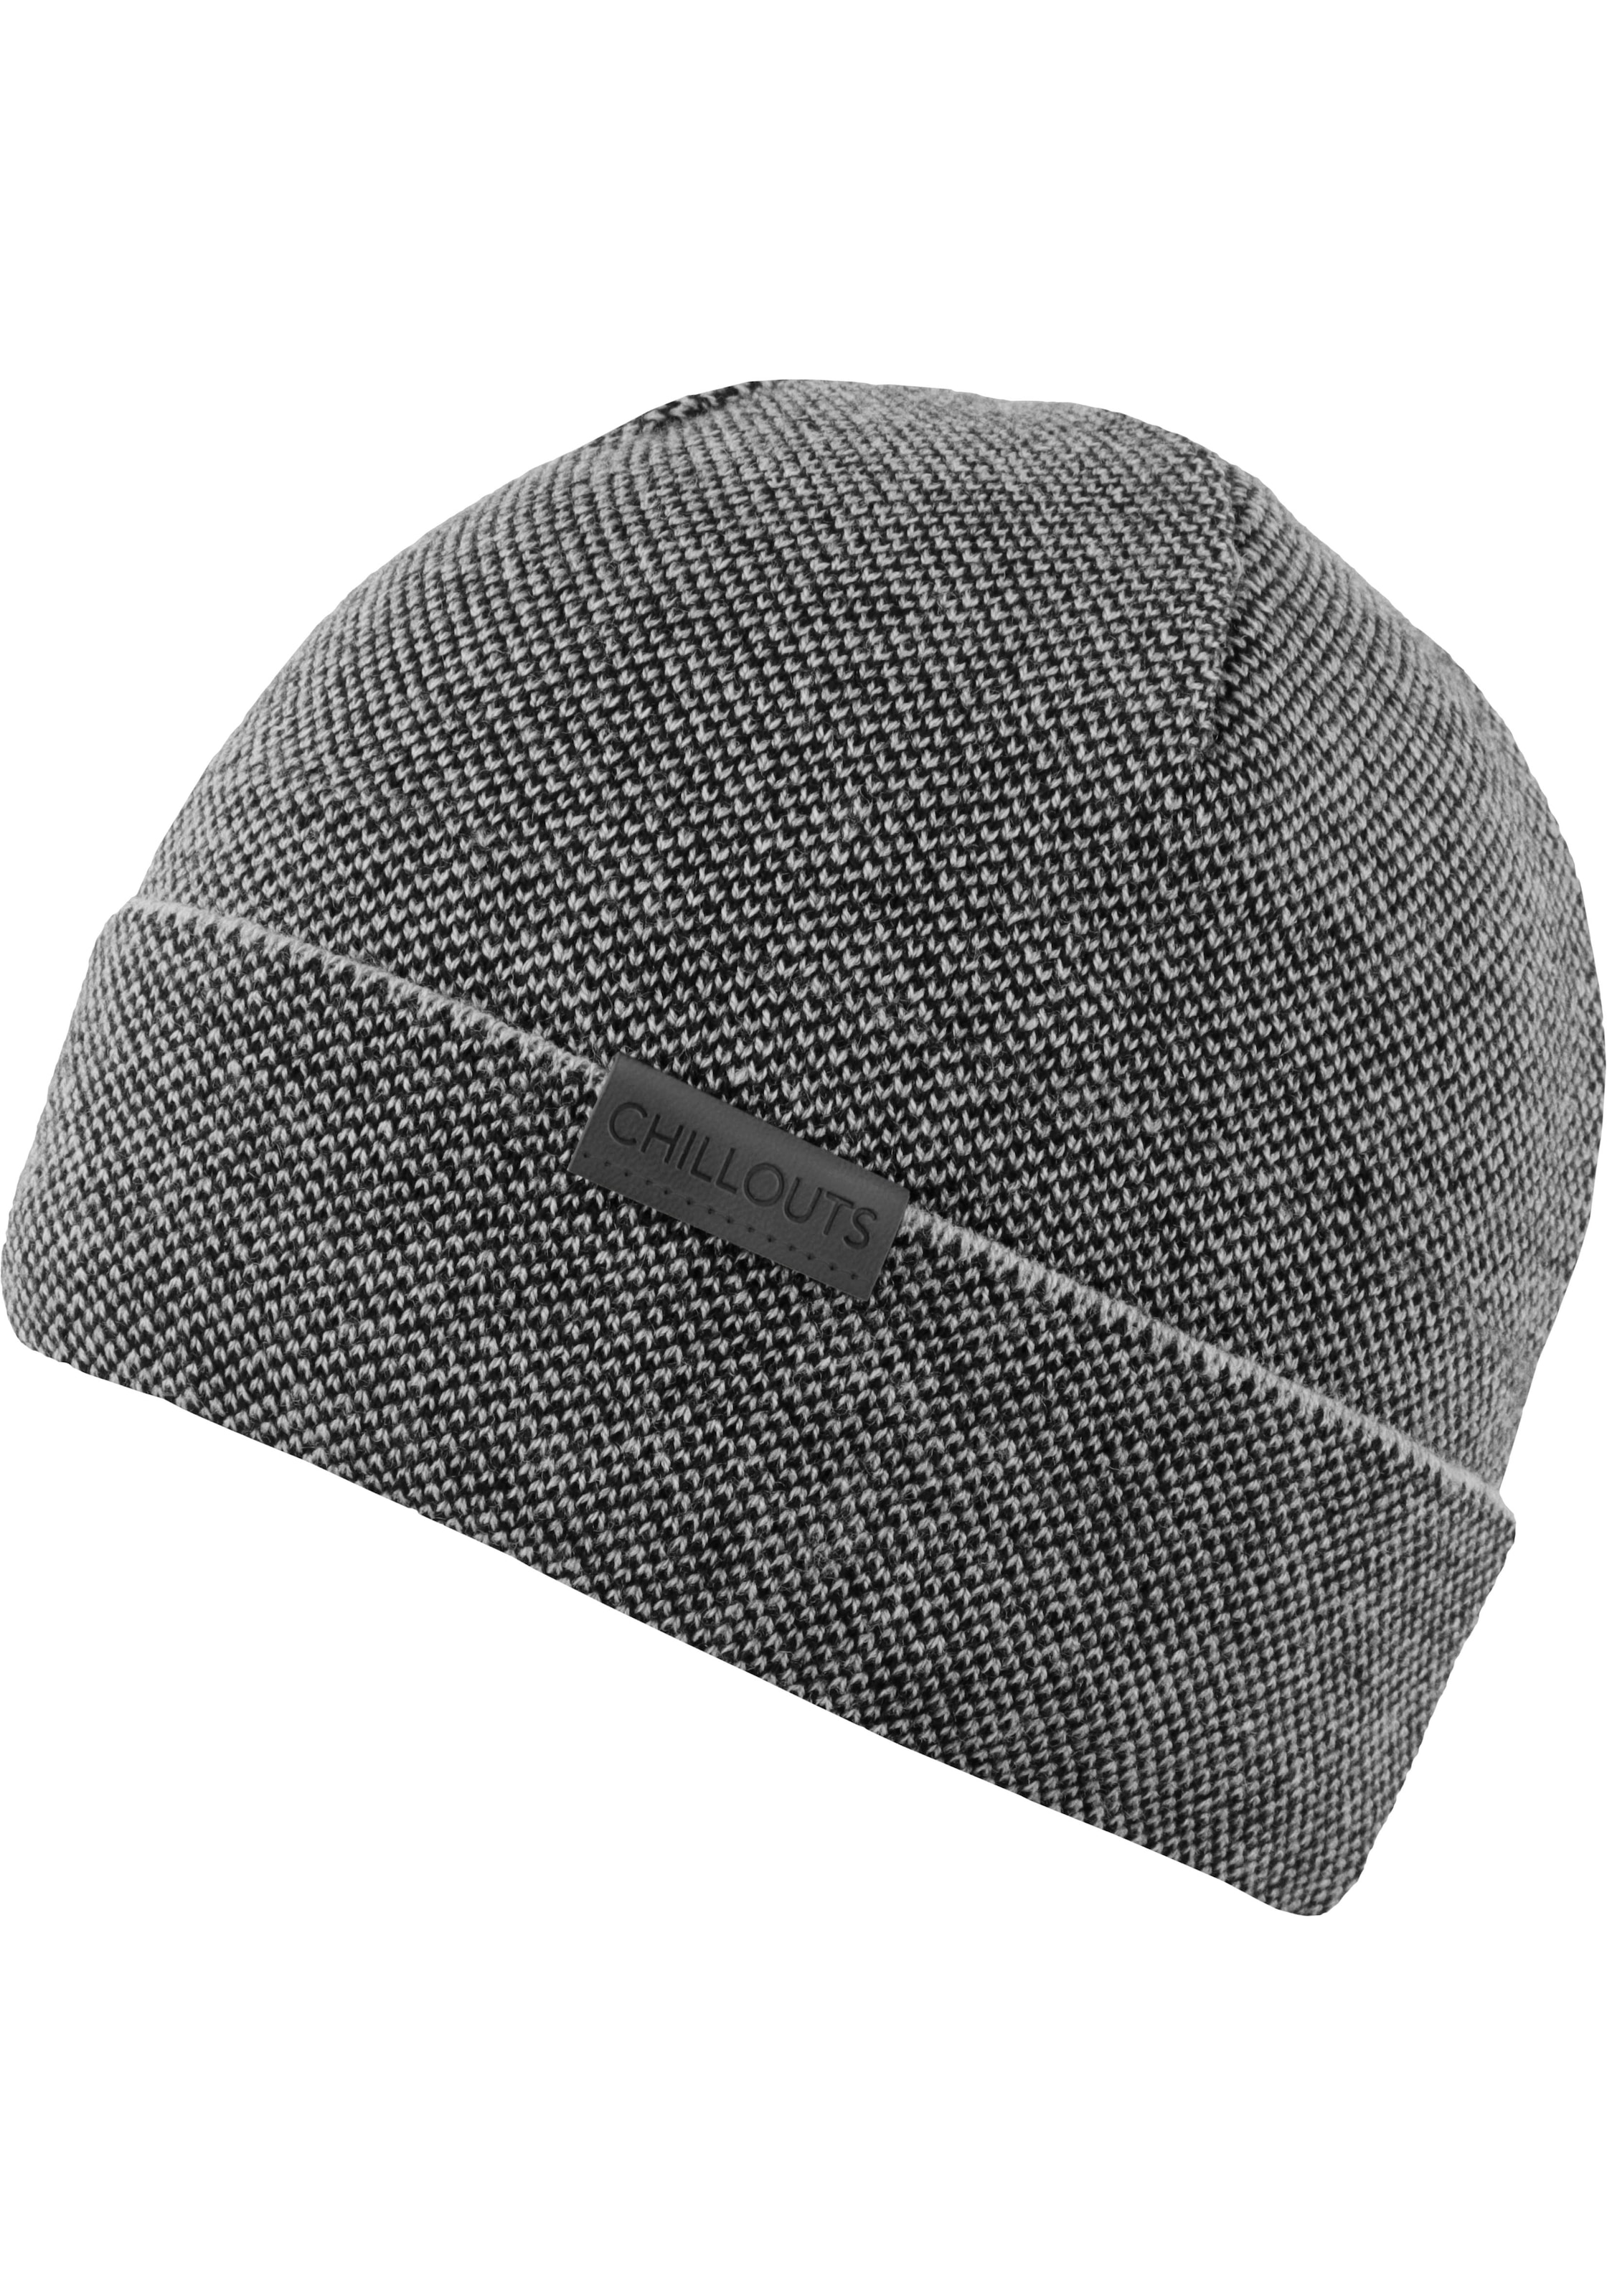 chillouts Strickmütze »Kilian Hat« online shoppen bei OTTO